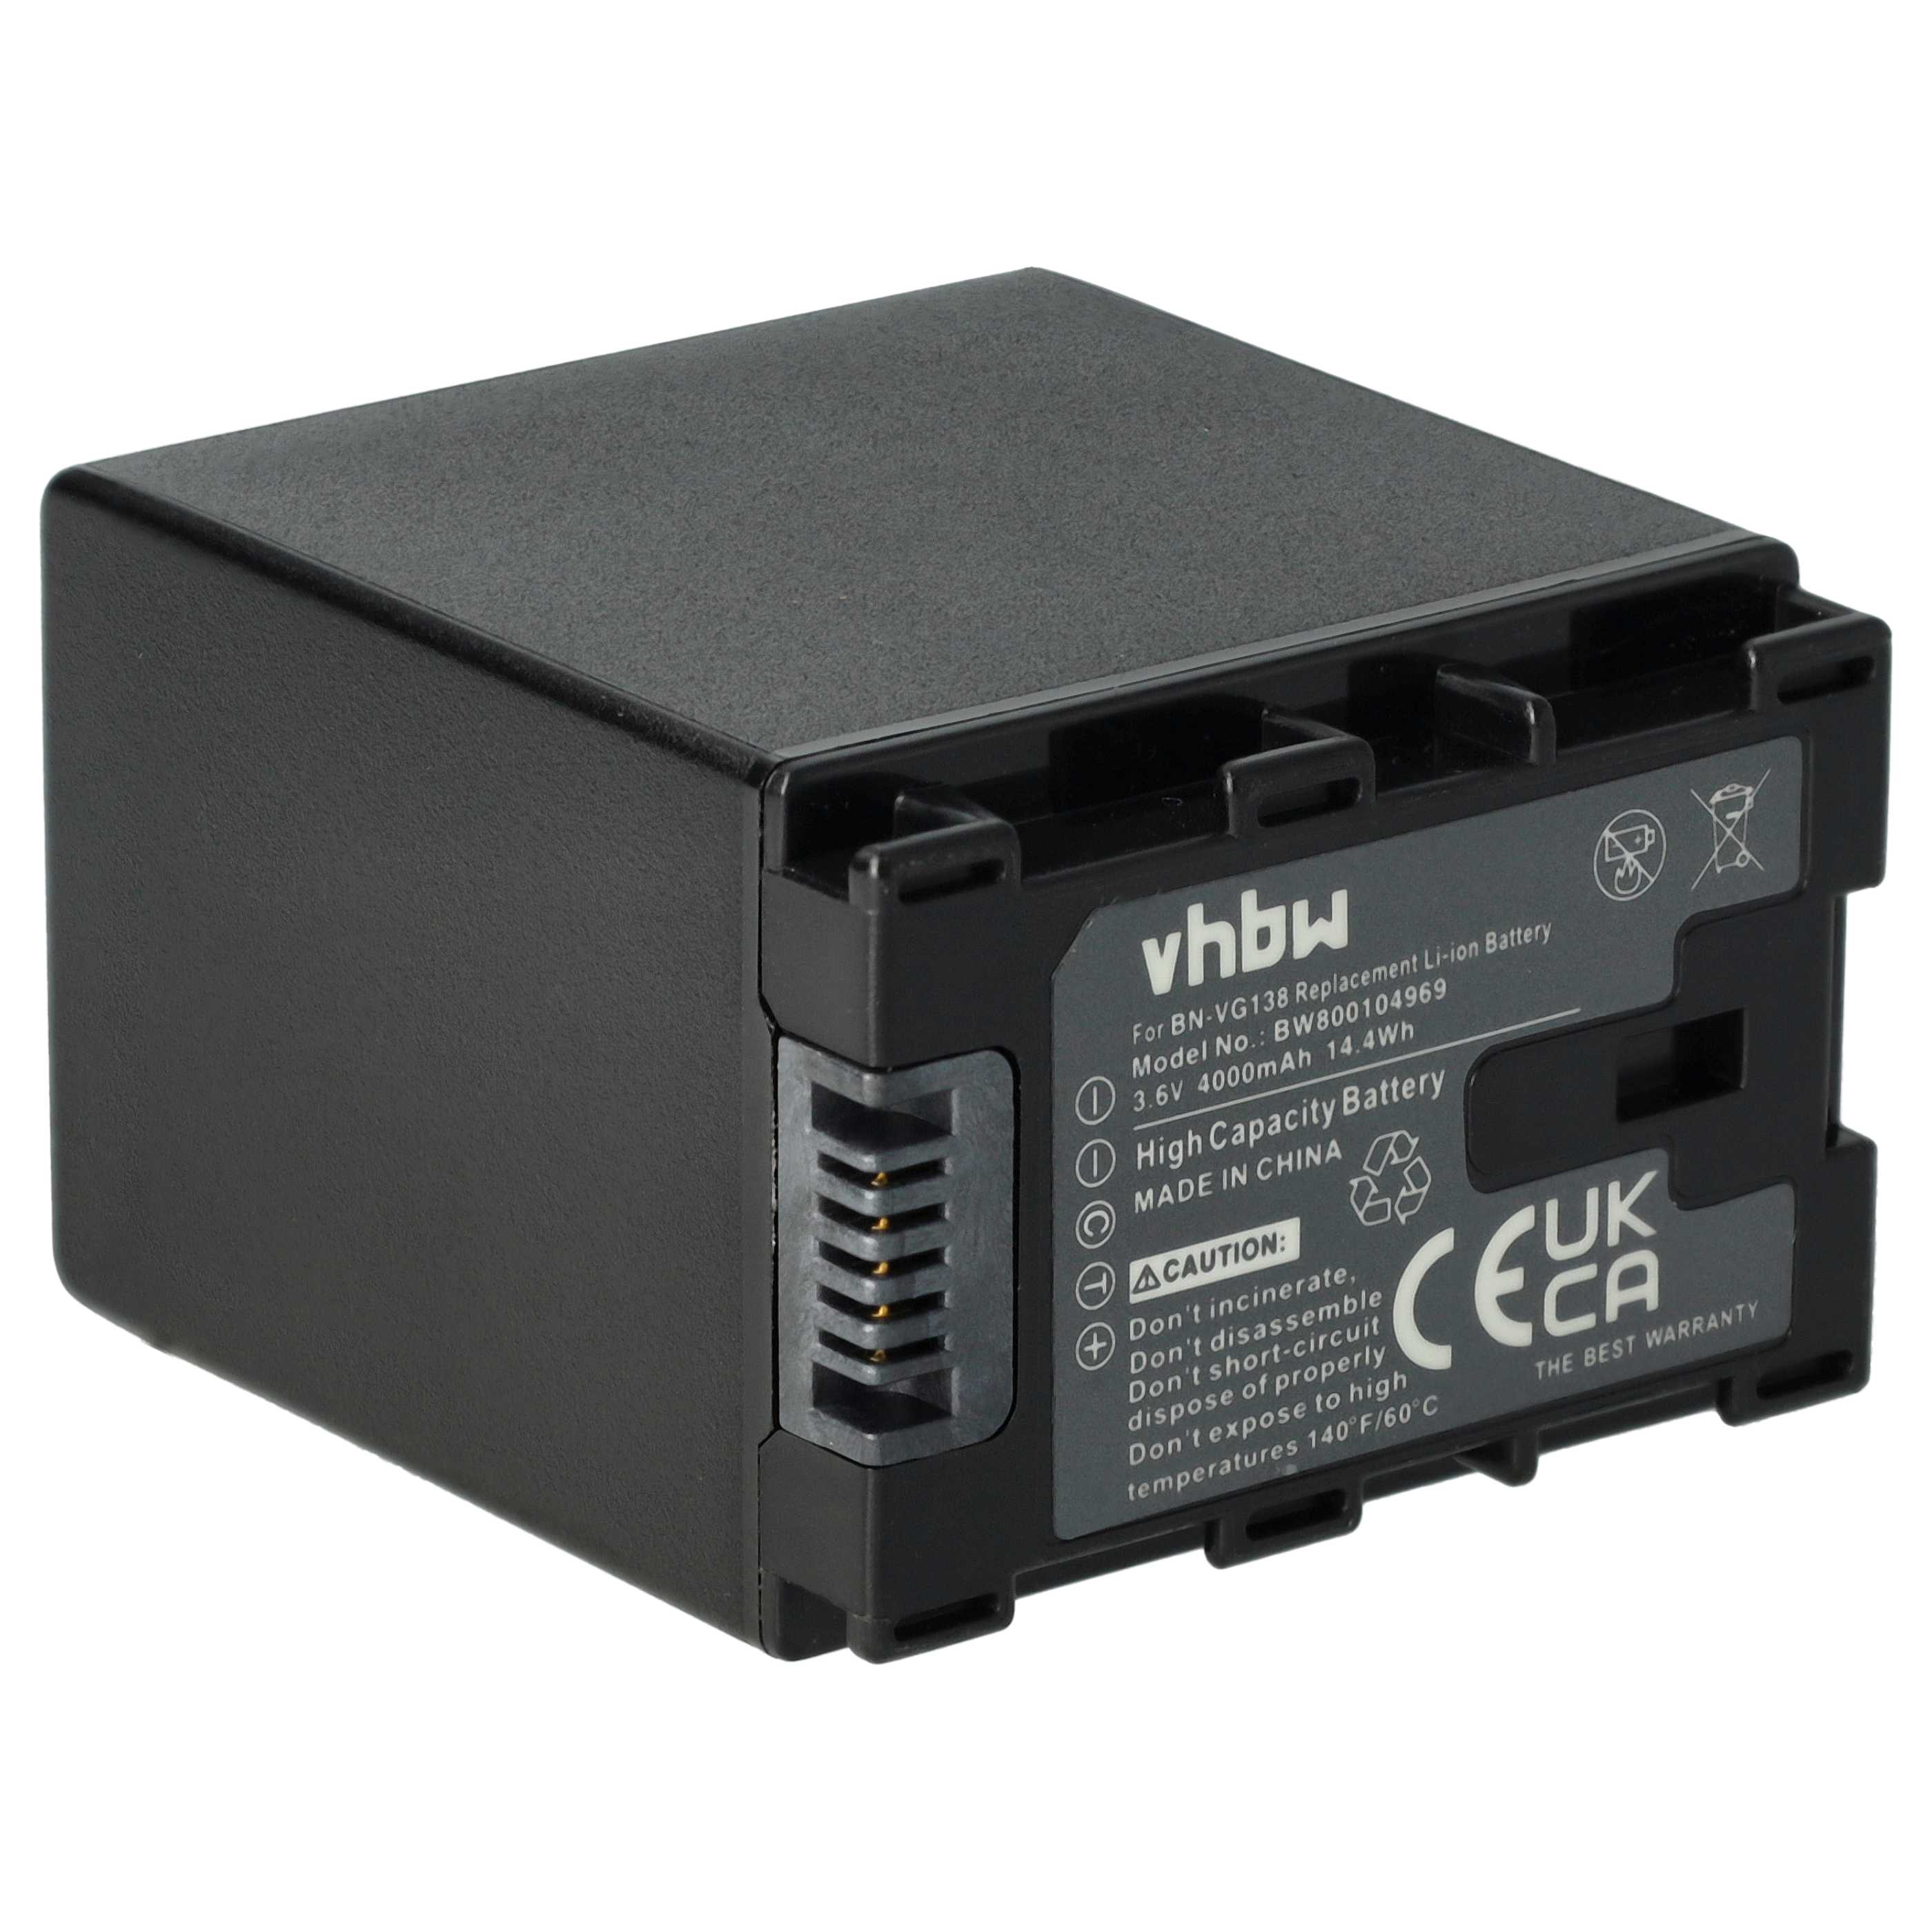 Videokamera-Akku als Ersatz für JVC BN-VG138 - 4000mAh 3,6V Li-Ion mit Infochip